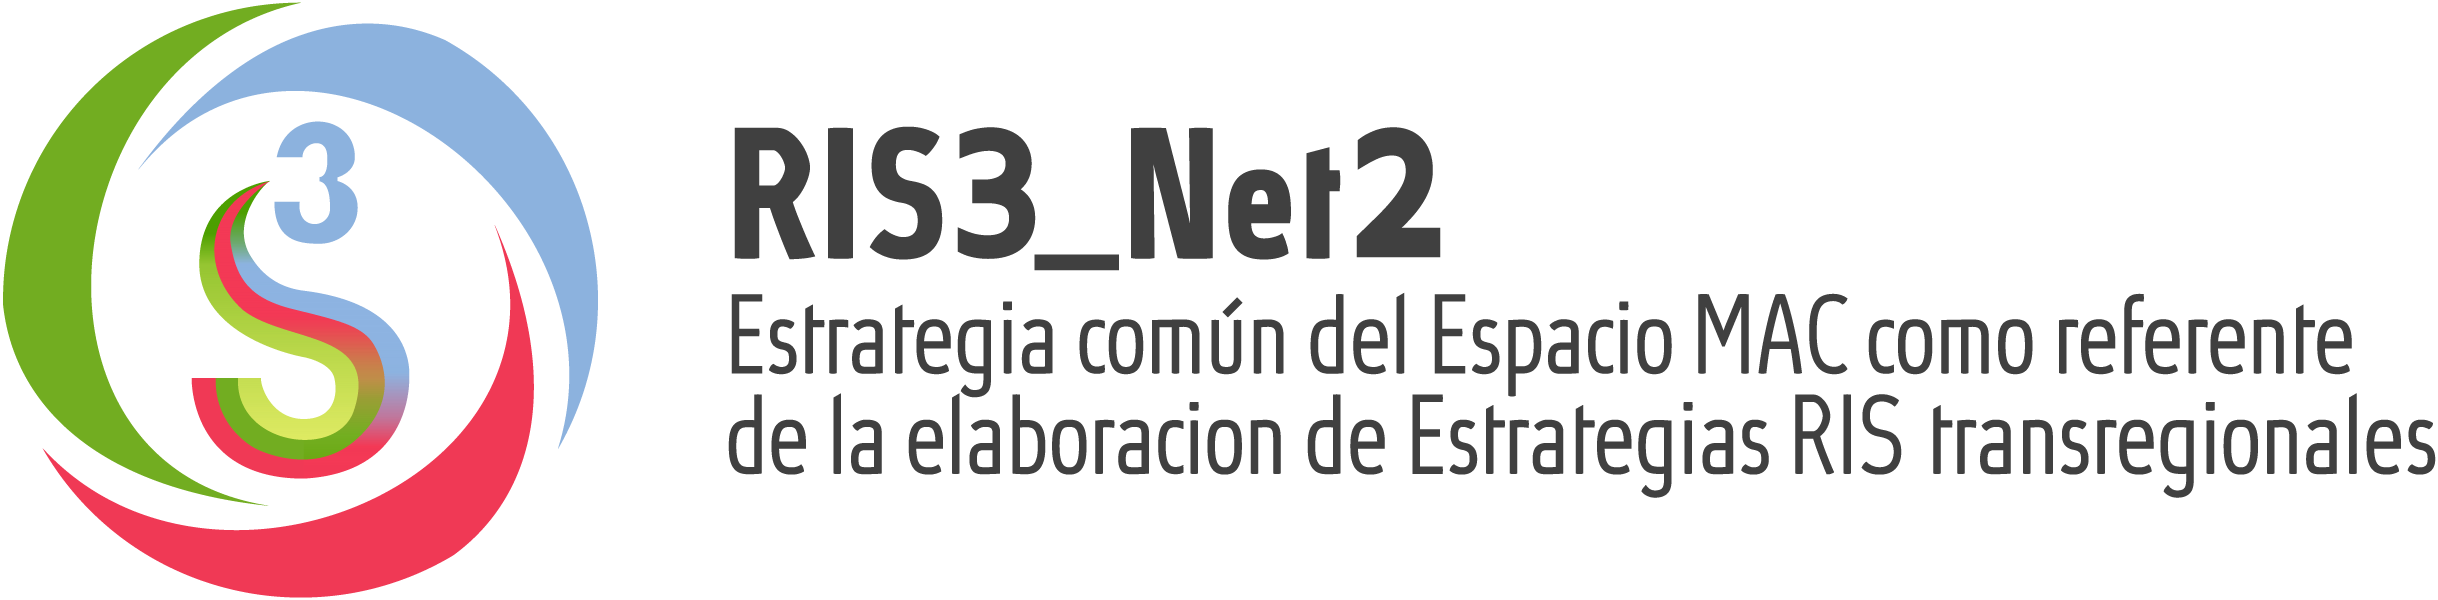 ris3 net 2 logo